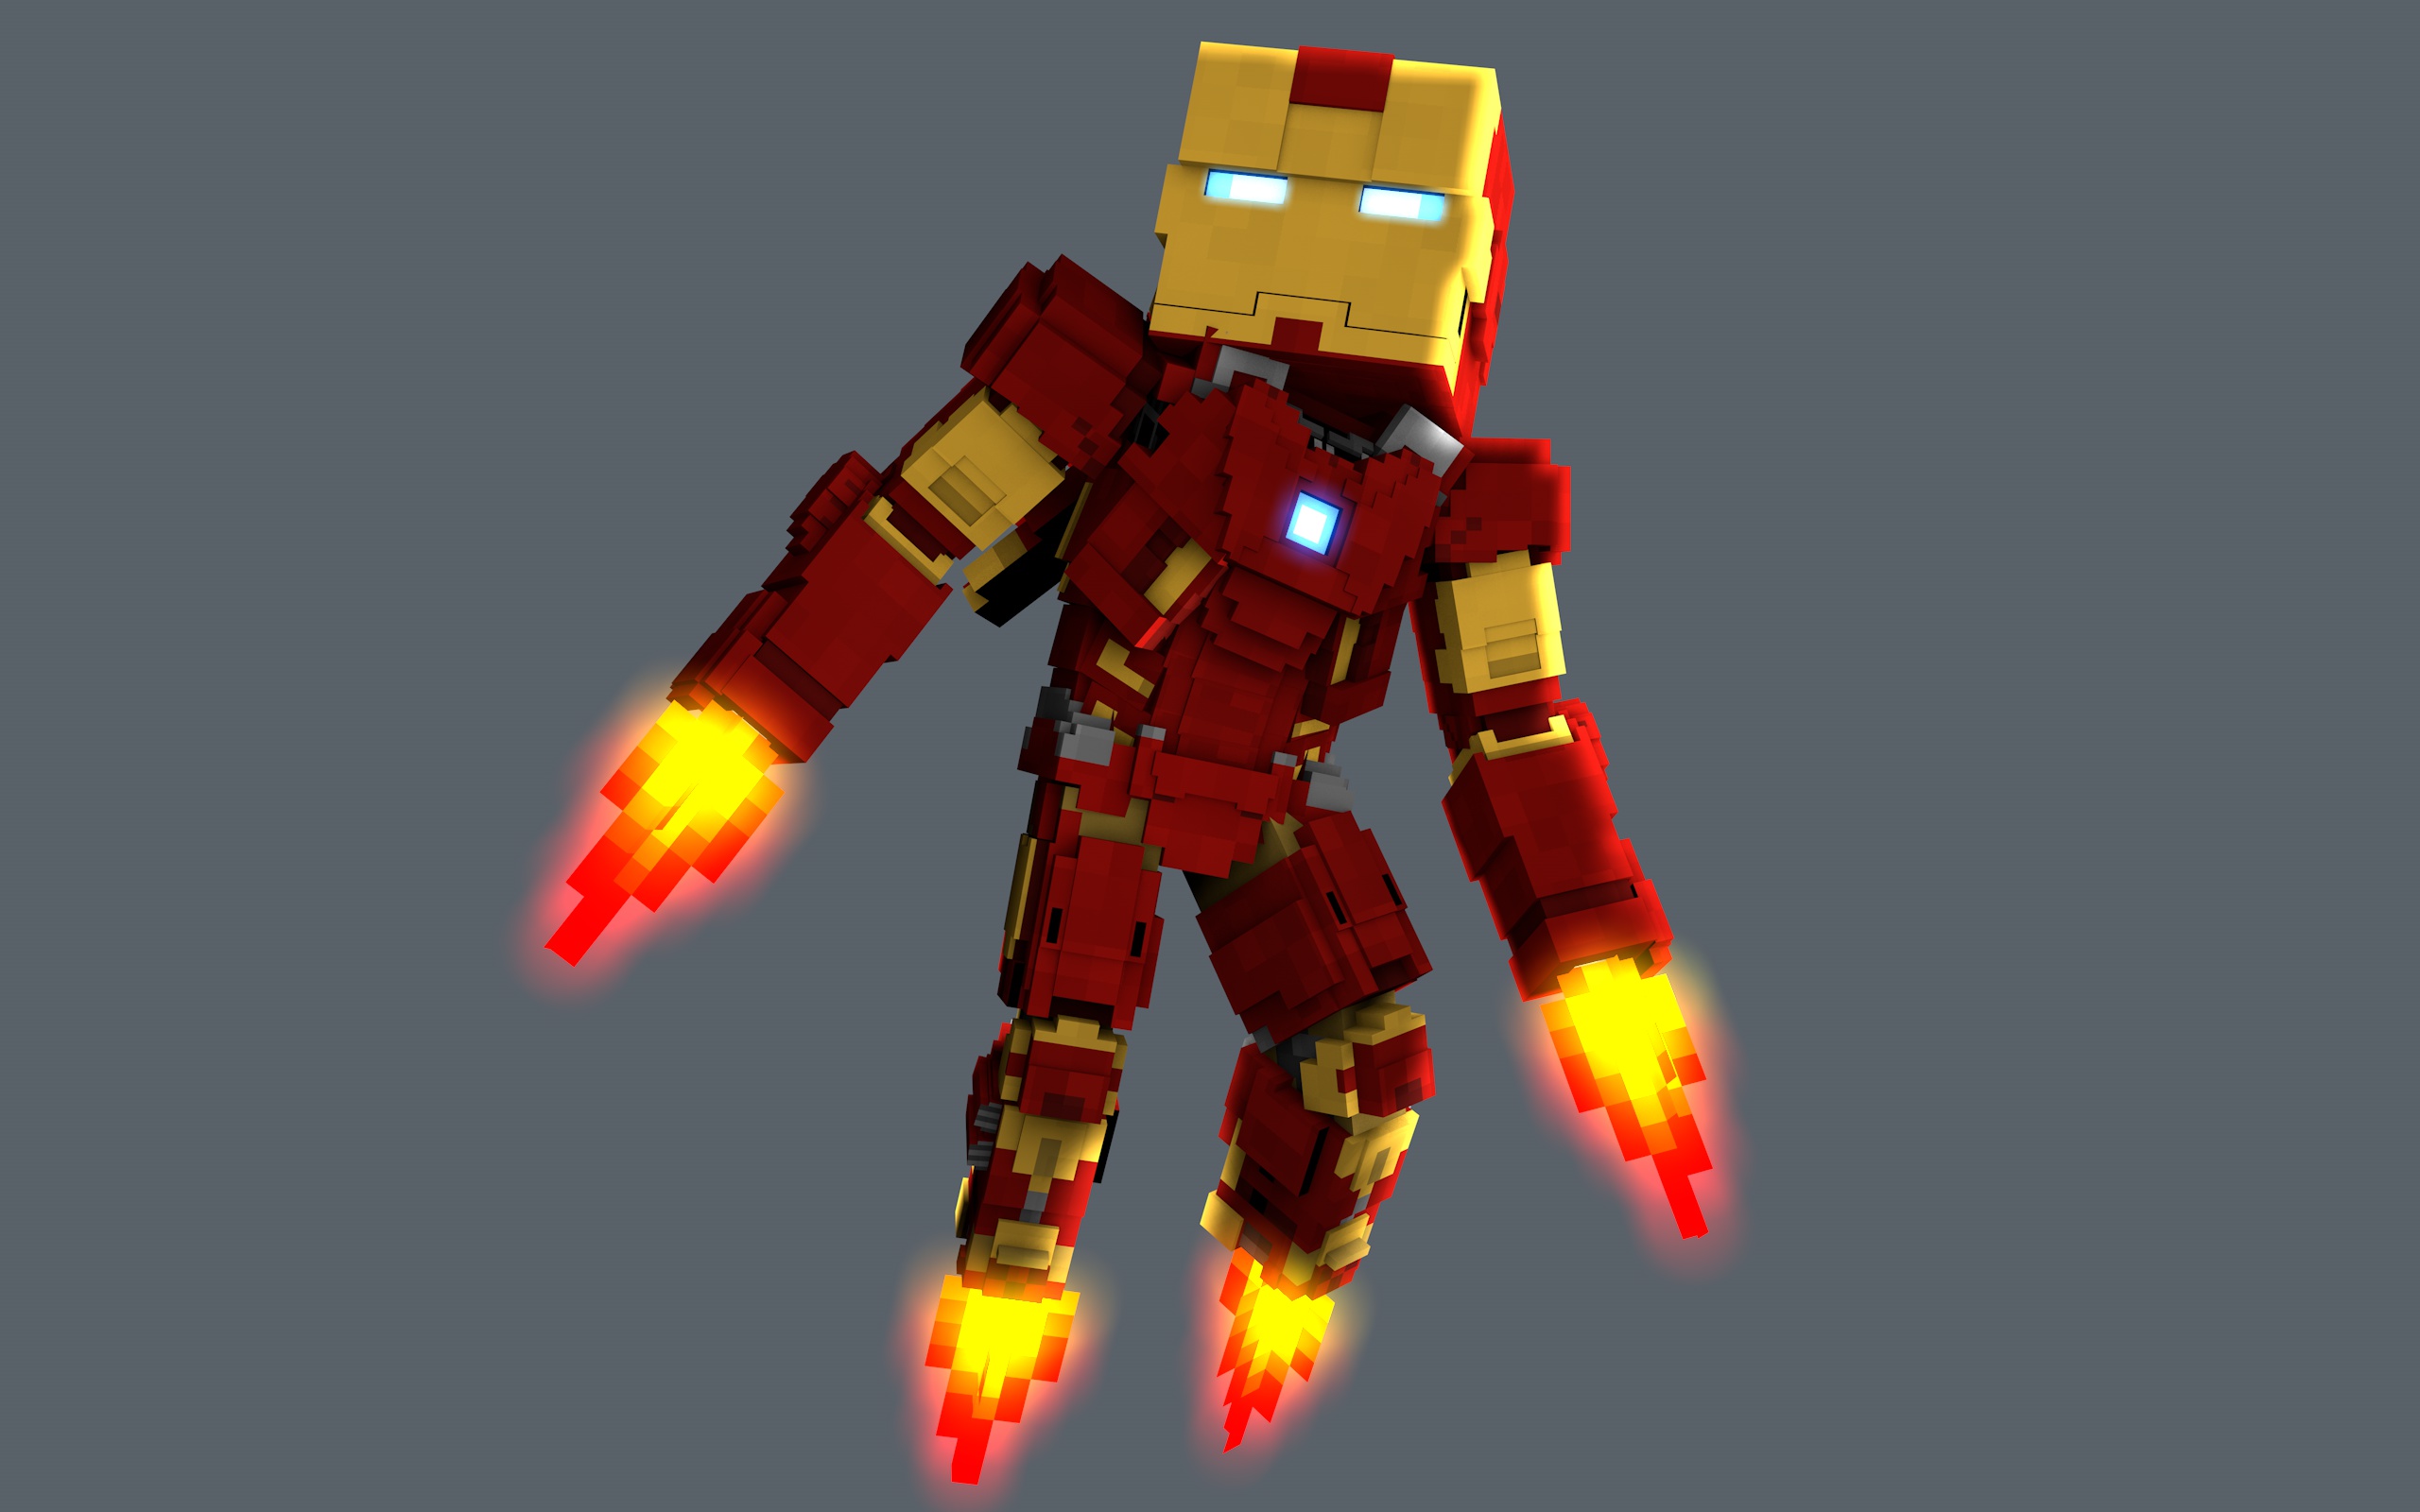 Fred Designs 2 Minecraft Iron Man Mark 9 Rig Iron Man 3 C4d T Co Wa9avwo8o4 T Co Zvdbrjtar2 Twitter